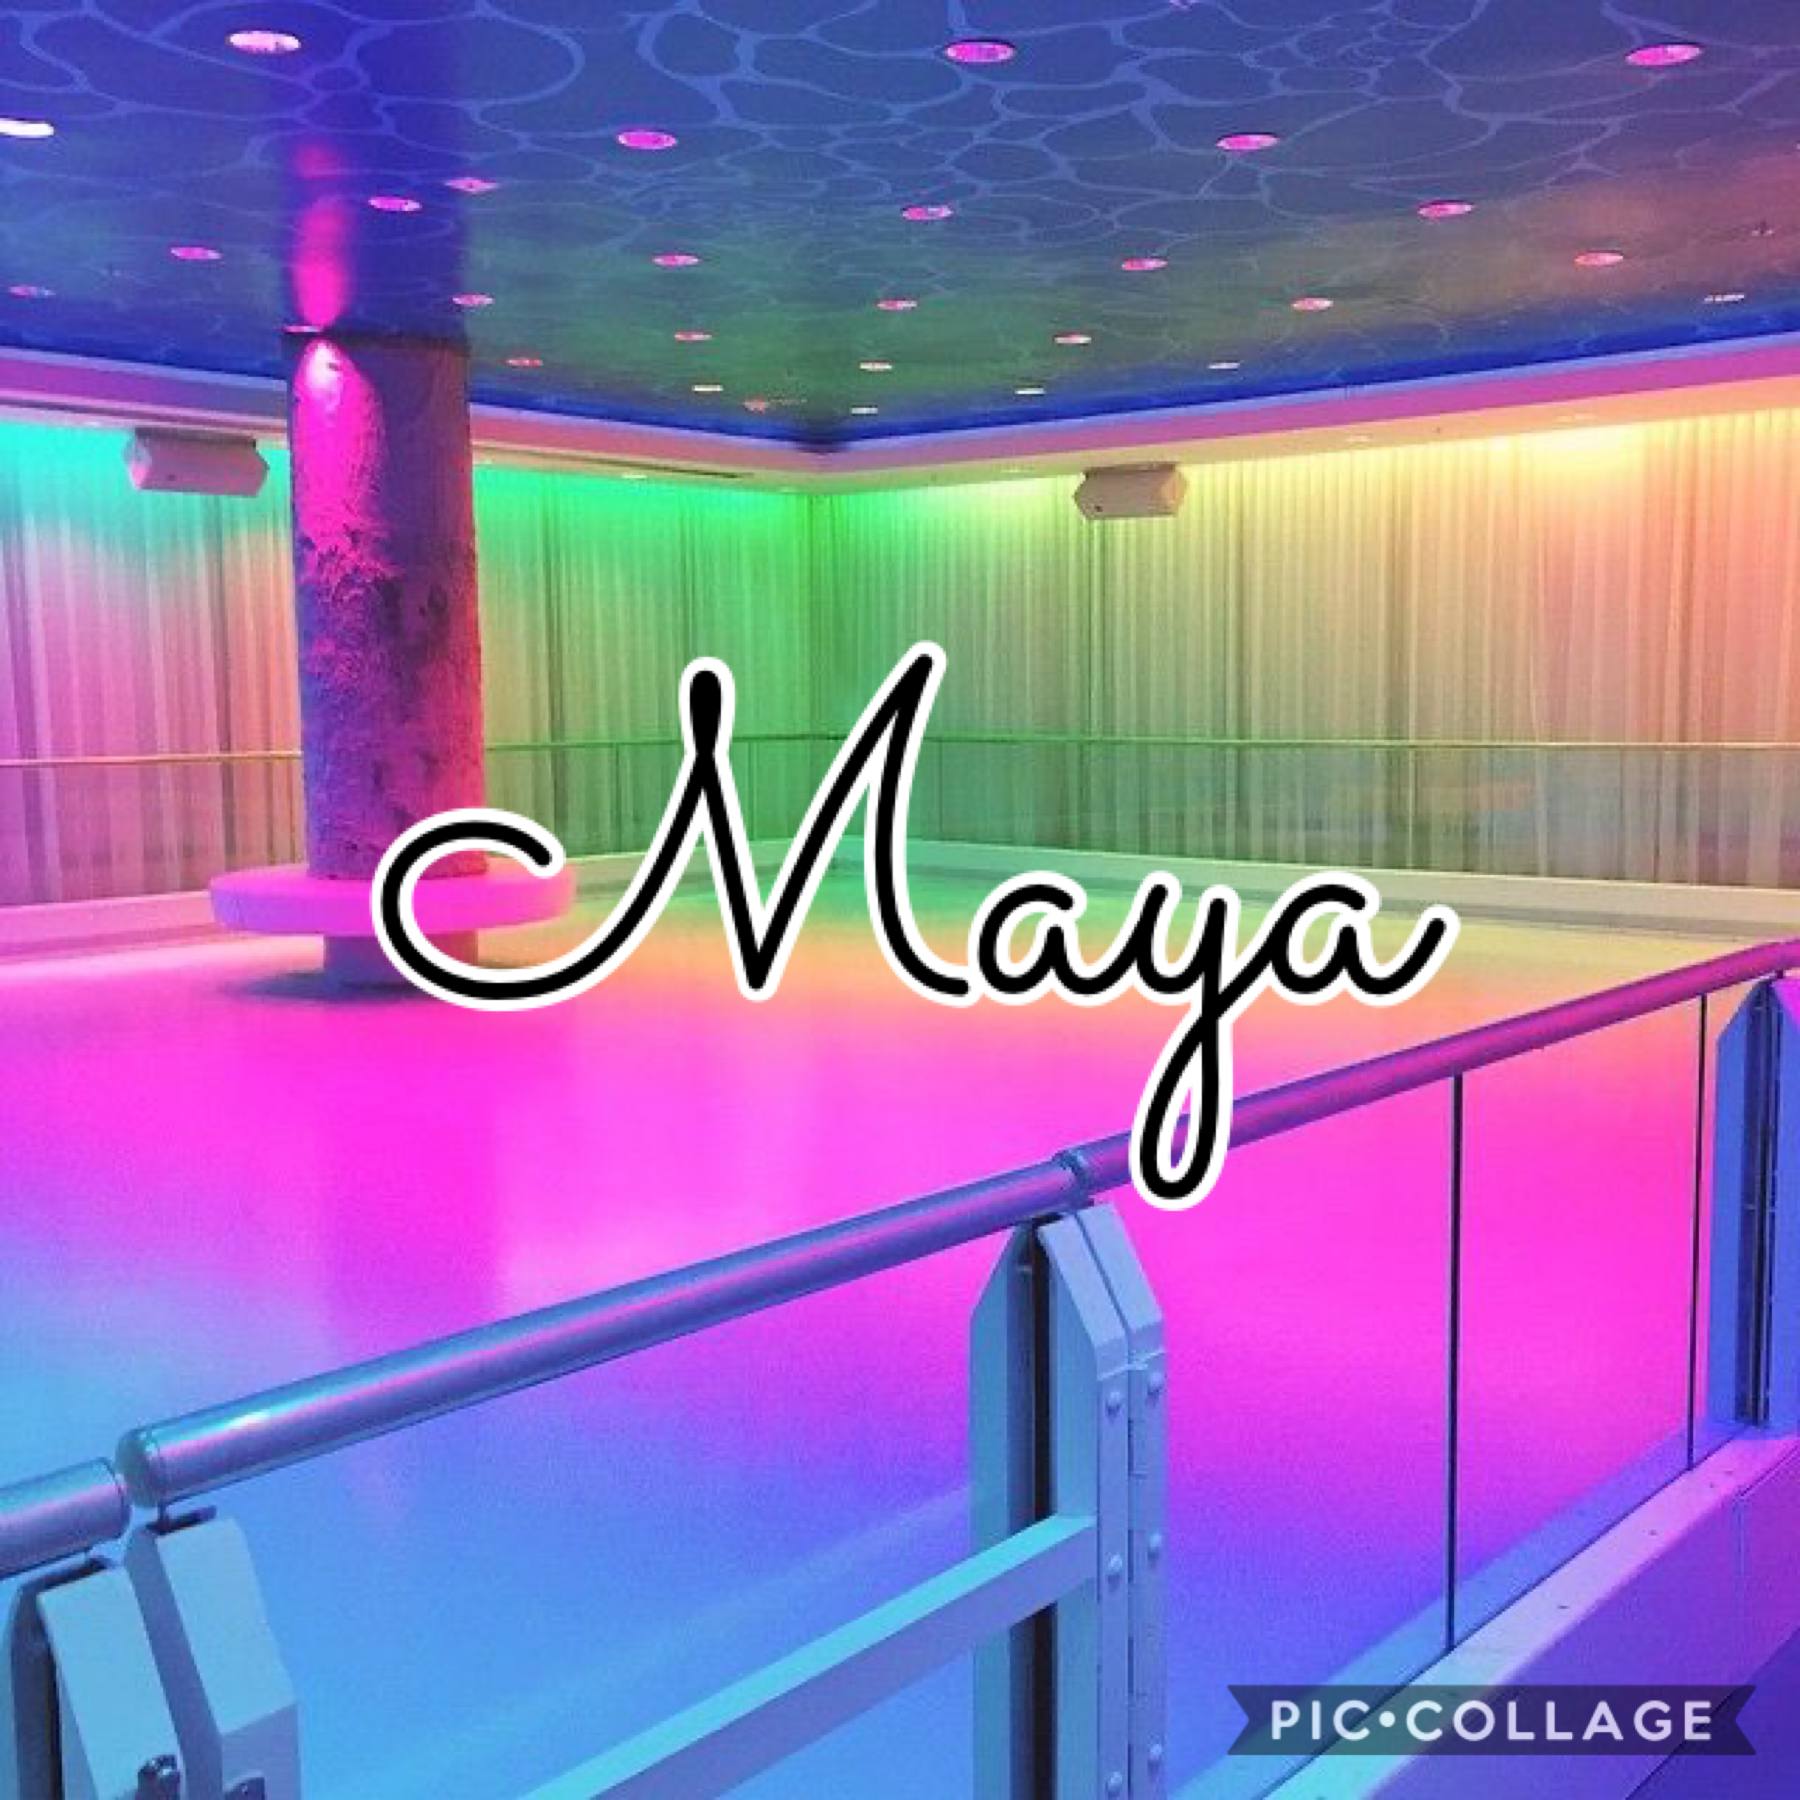 ~Maya~
Or Tyler